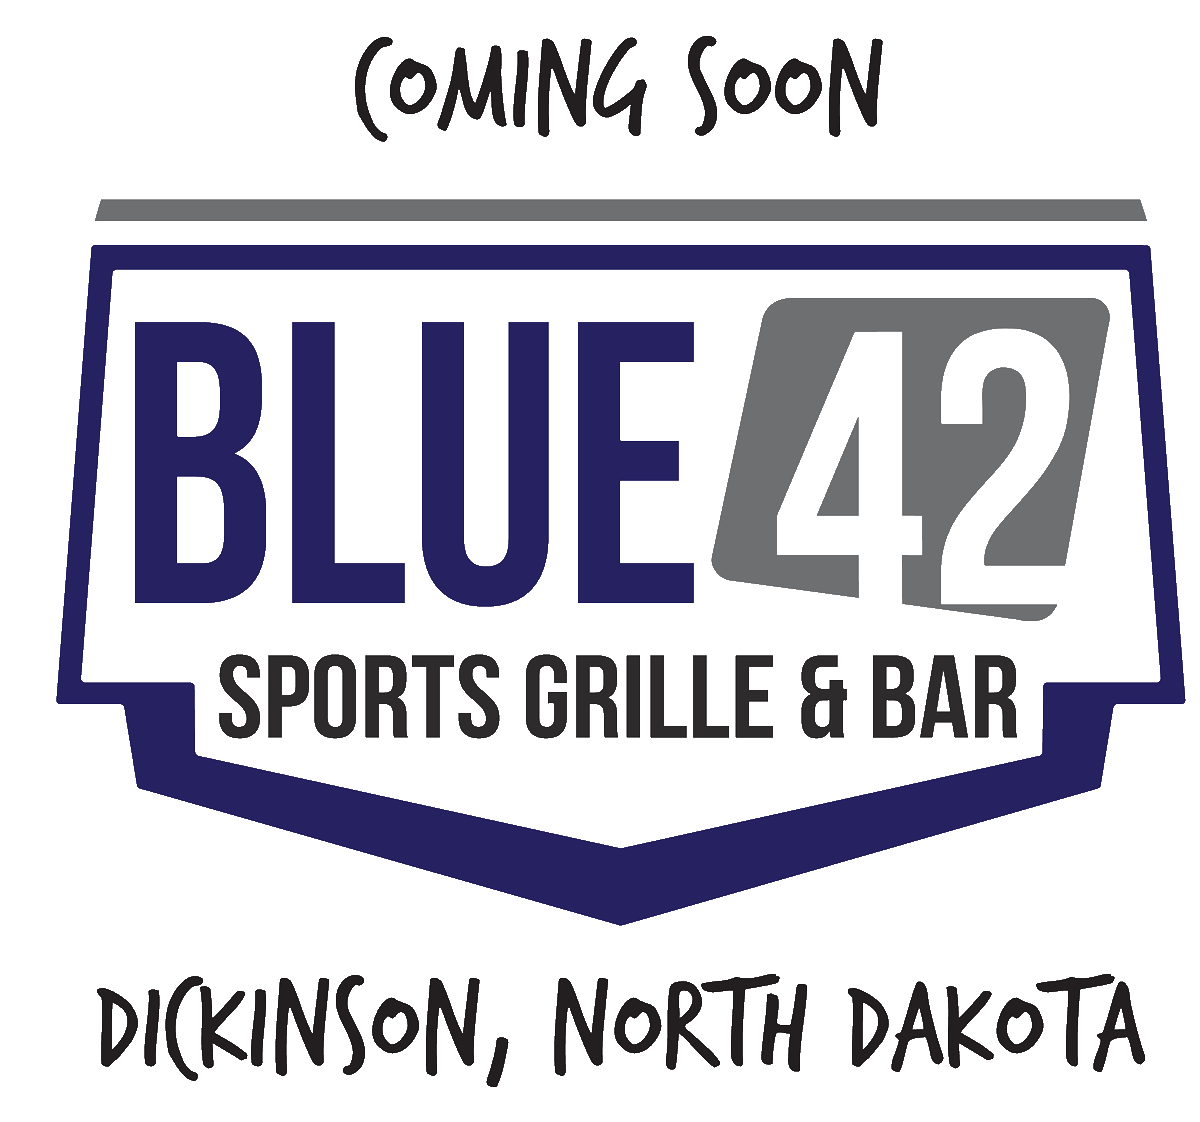 Blue 42 Sports Grille & Bar - Dickinson, North Dakota